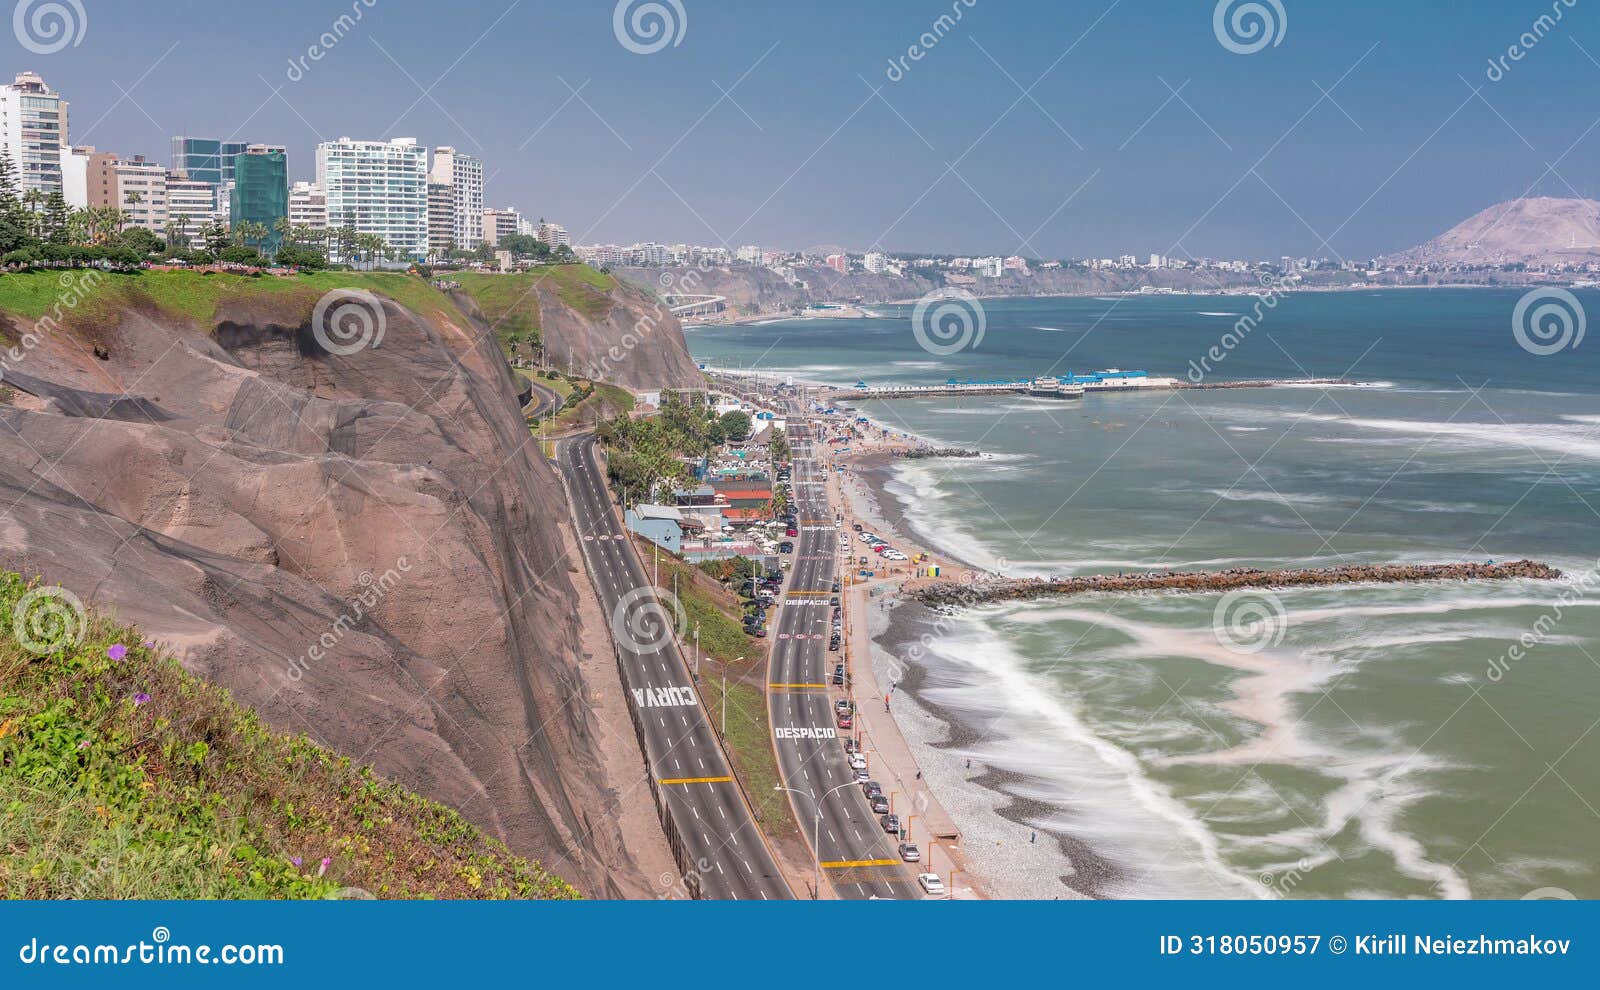 aerial view of lima's coastline in the neighborhood of miraflores timelapse, lima, peru